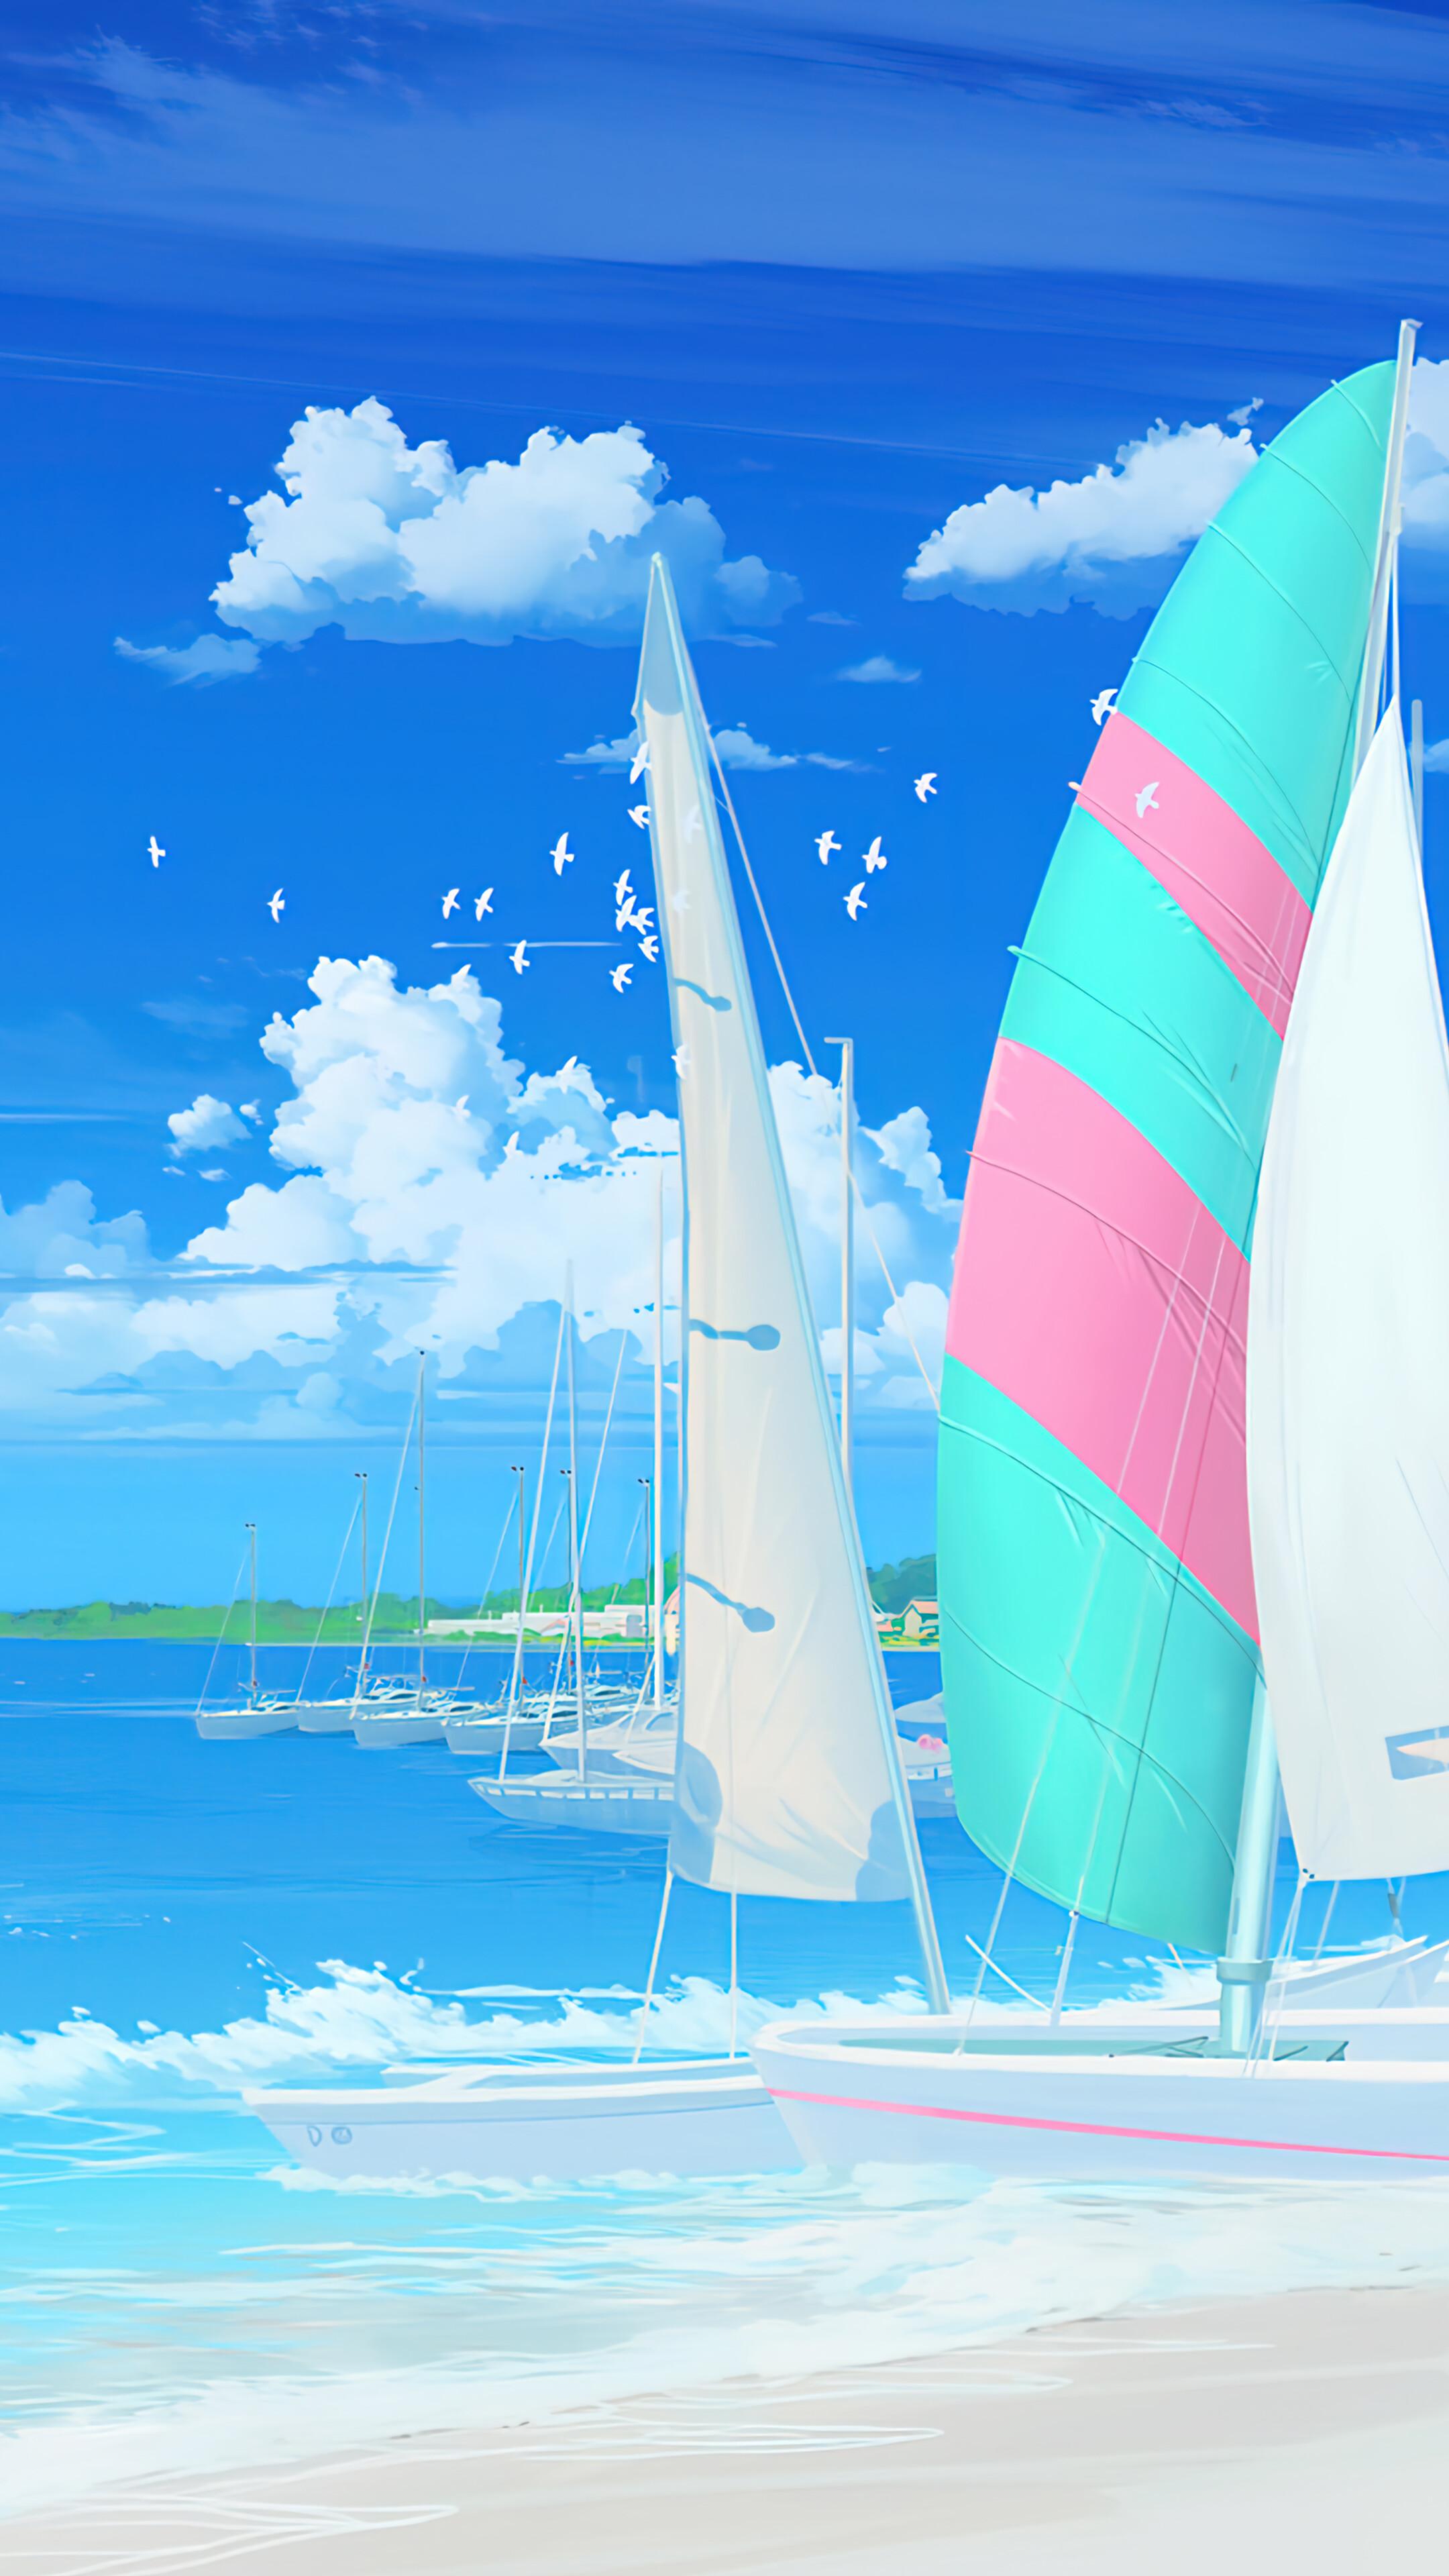 3,242 Anime Beach Images, Stock Photos & Vectors | Shutterstock